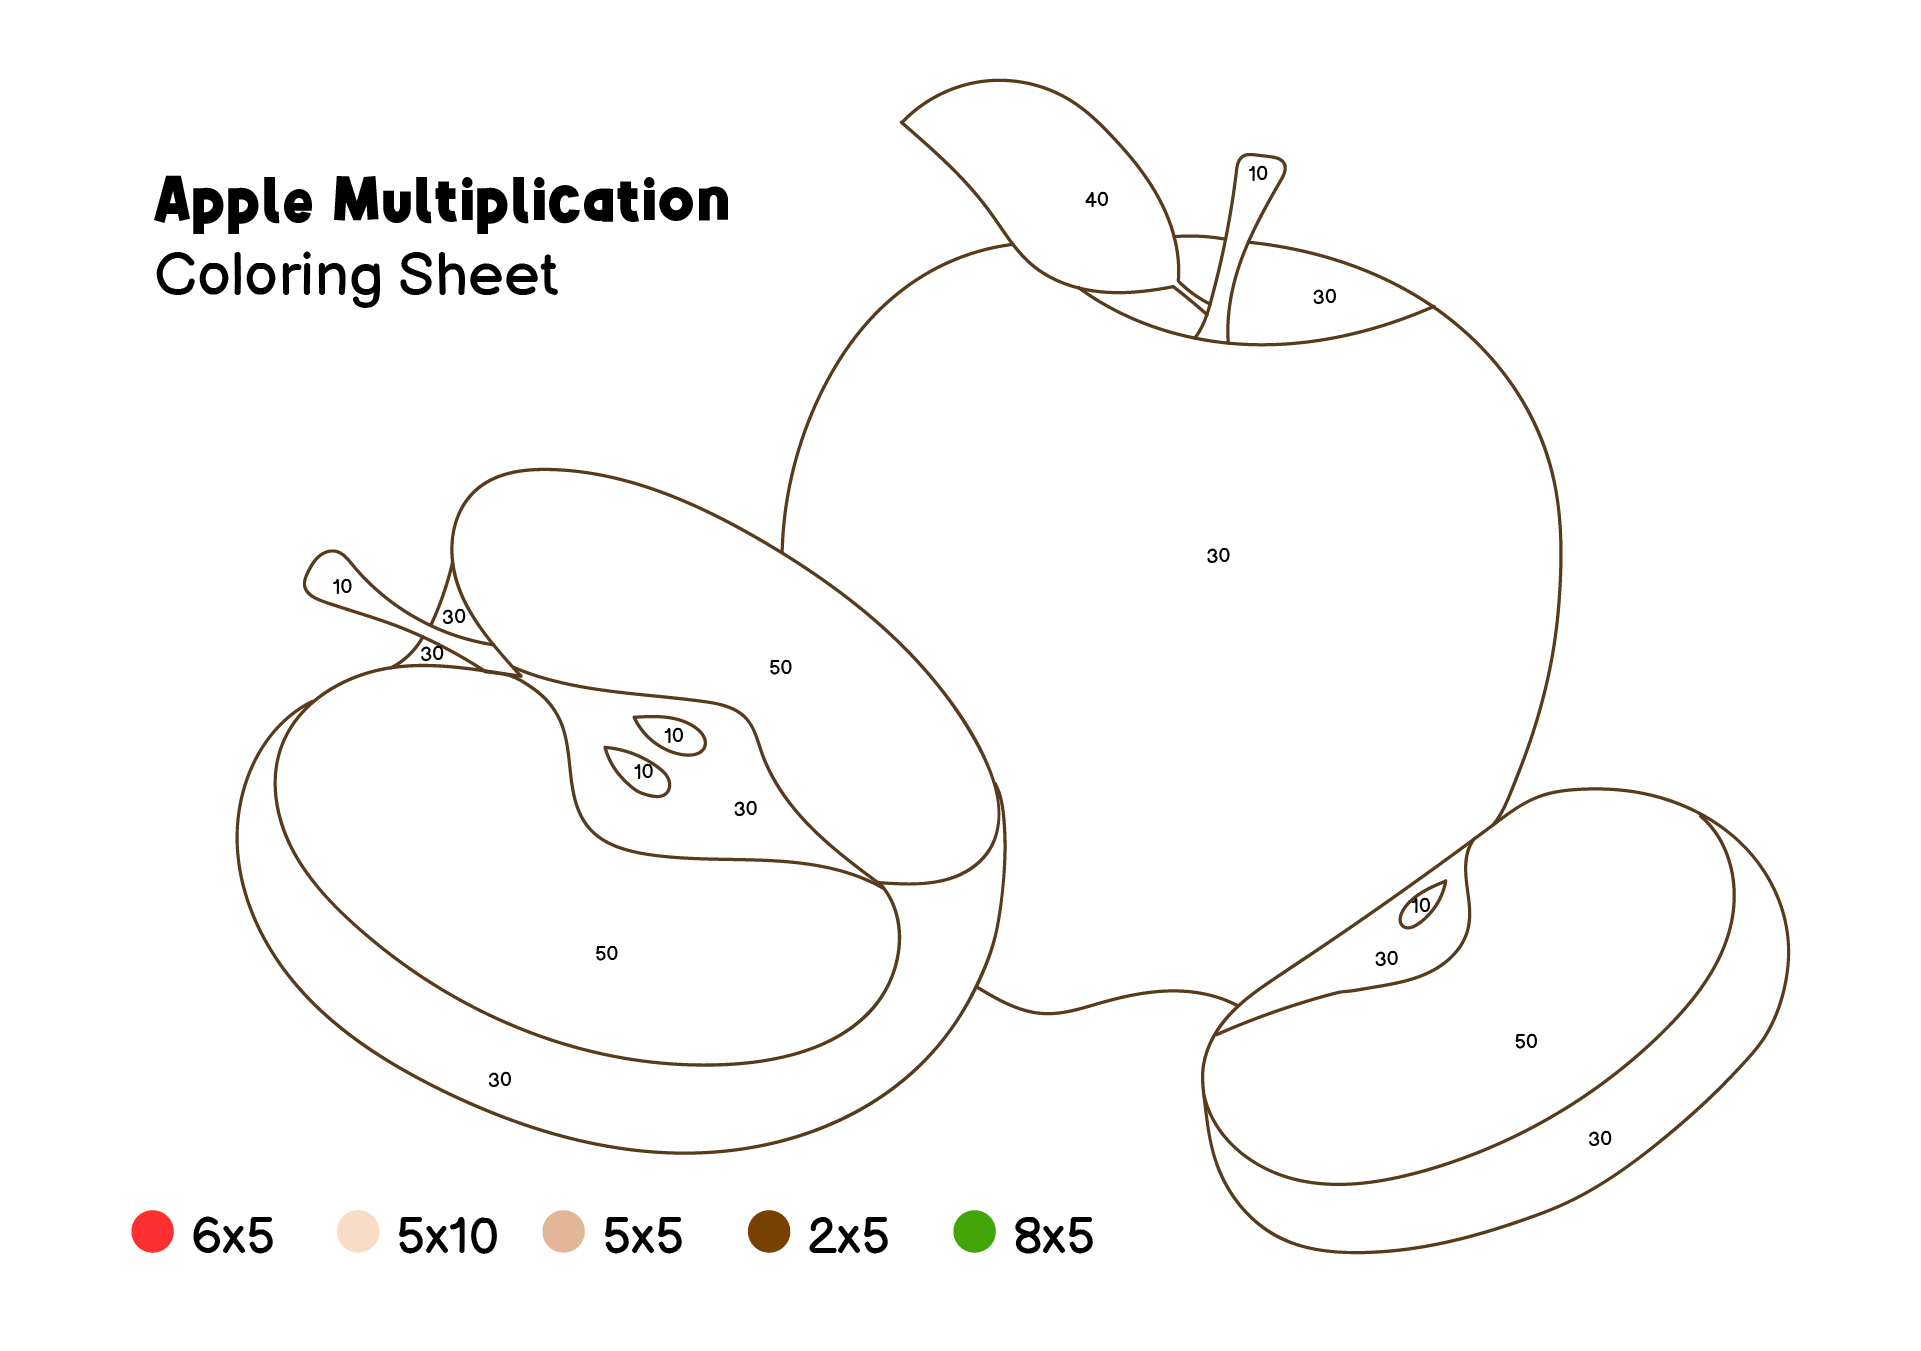 Apple Multiplication Coloring Sheet